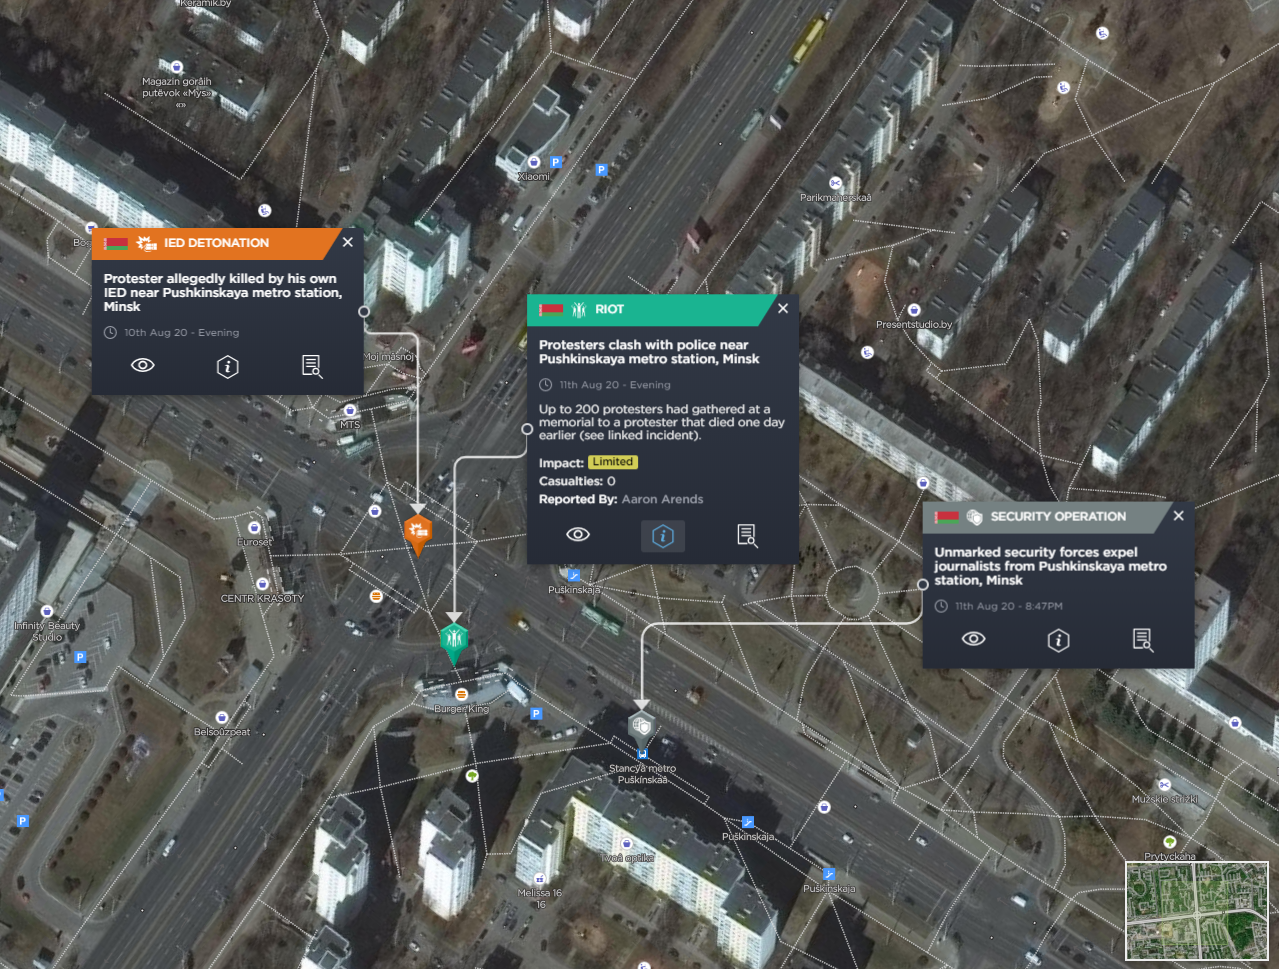 Recent incidents reported near Pushkinskaya metro station, Minsk.